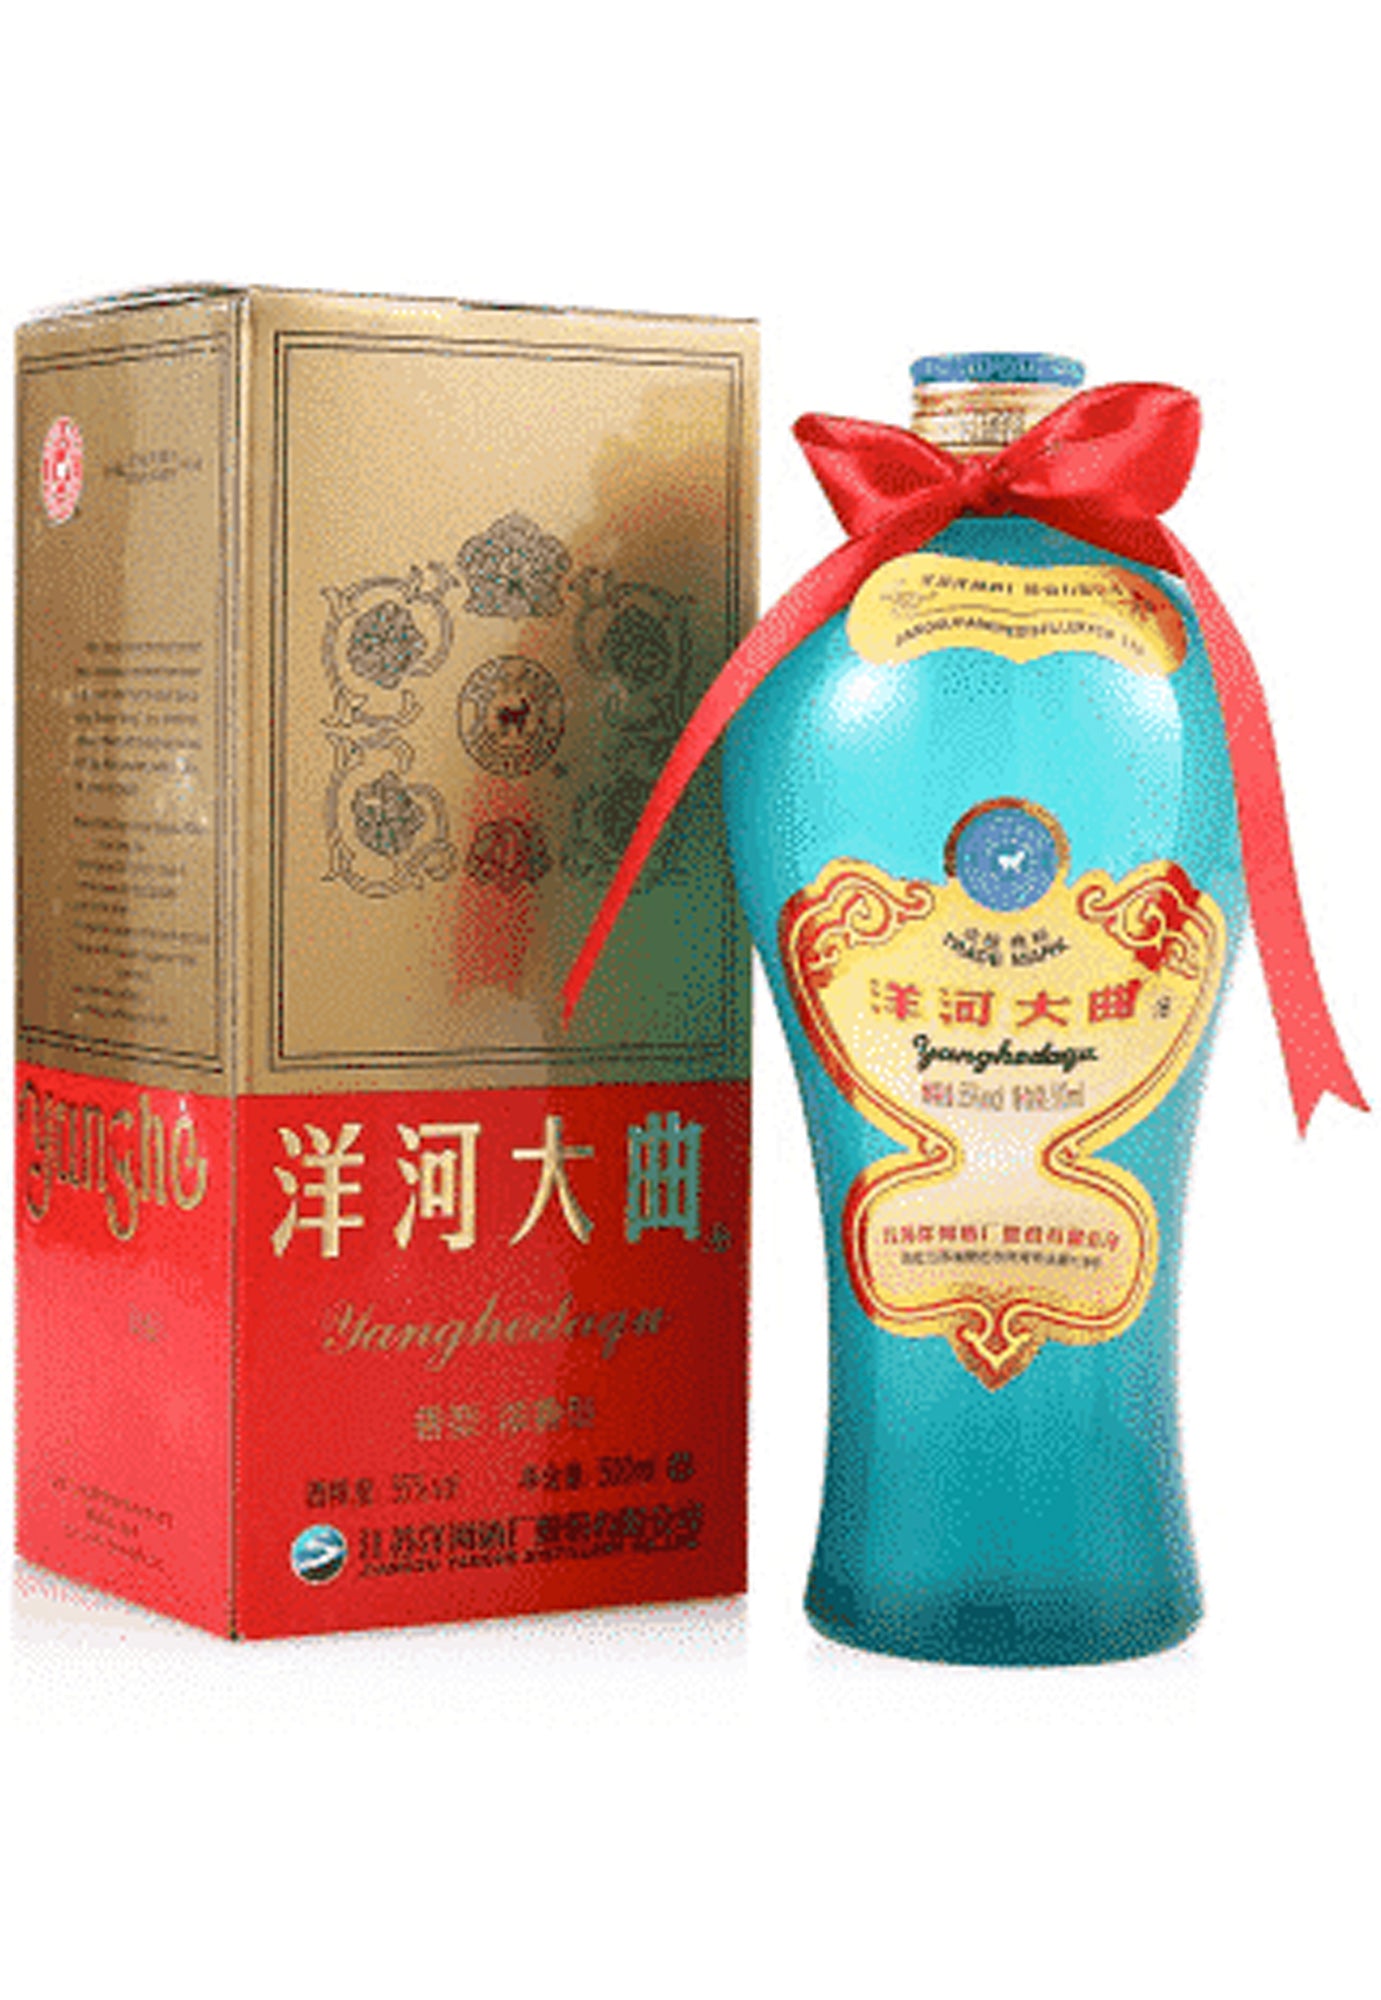 Yanghe Daqu Baijiu - 500 ml